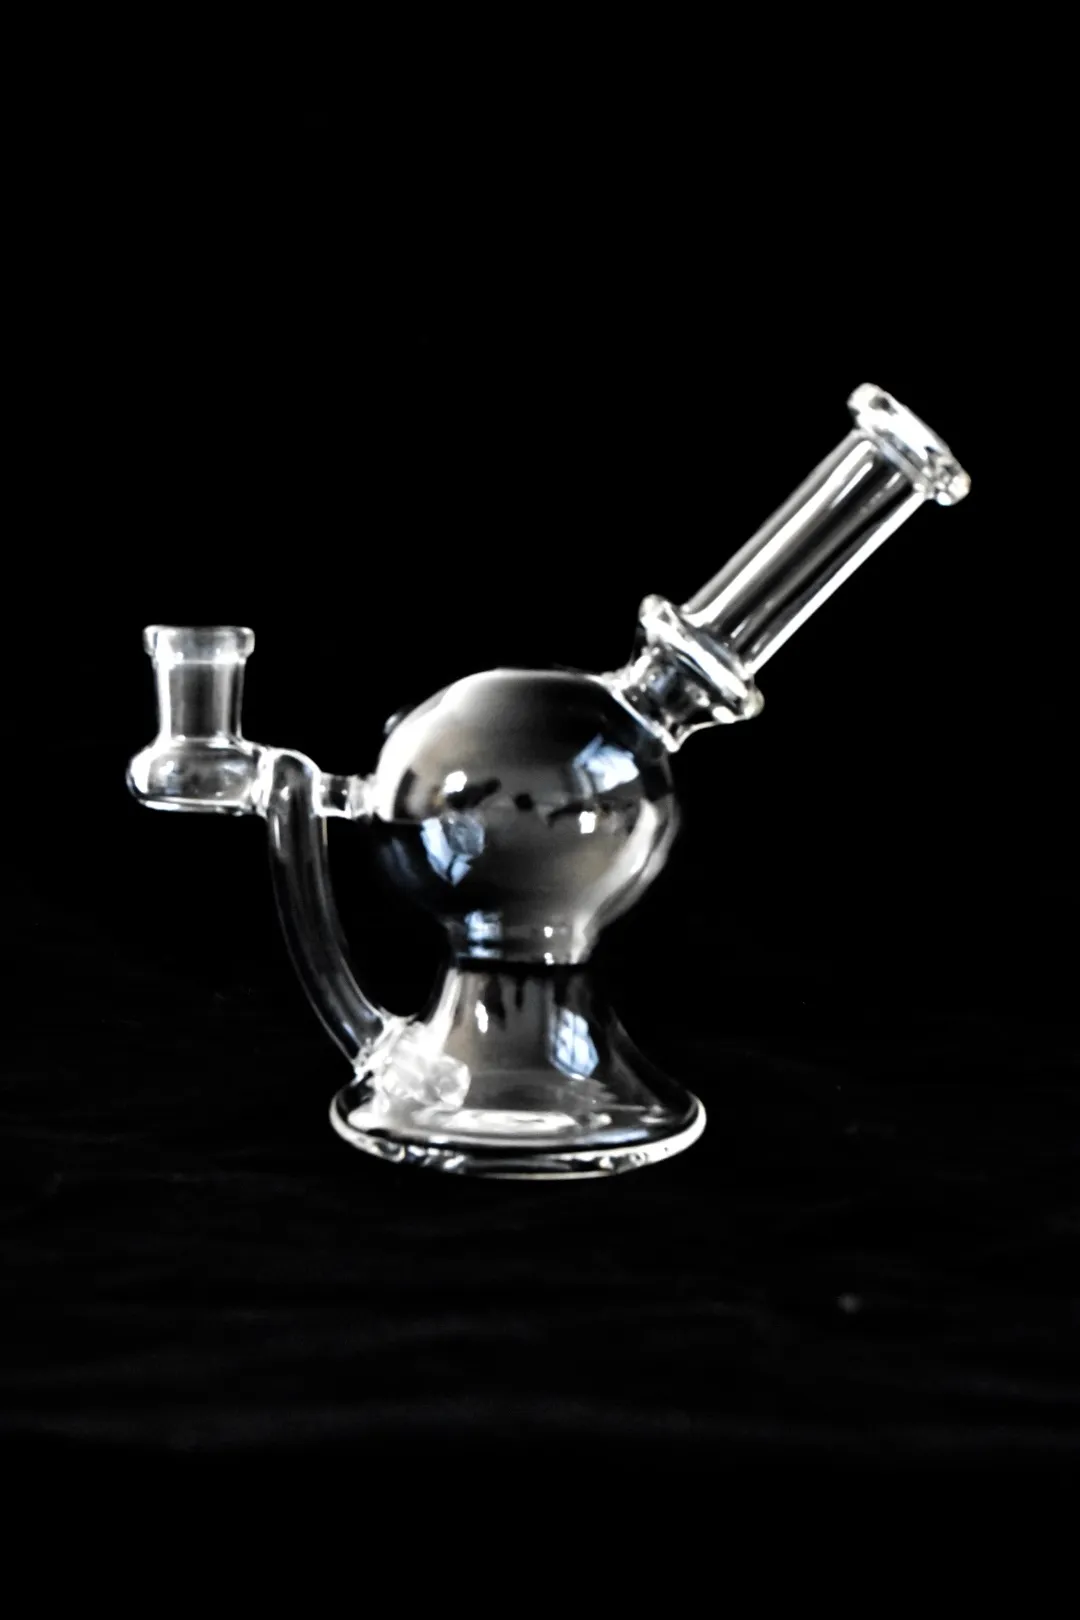 2019-new-style-factory-price-heady-hight-quaility-rig-bongs-smoking-glass-pipes-colorful-glass-bongbig-beaker-oil-rig-glass-bowl.jpg